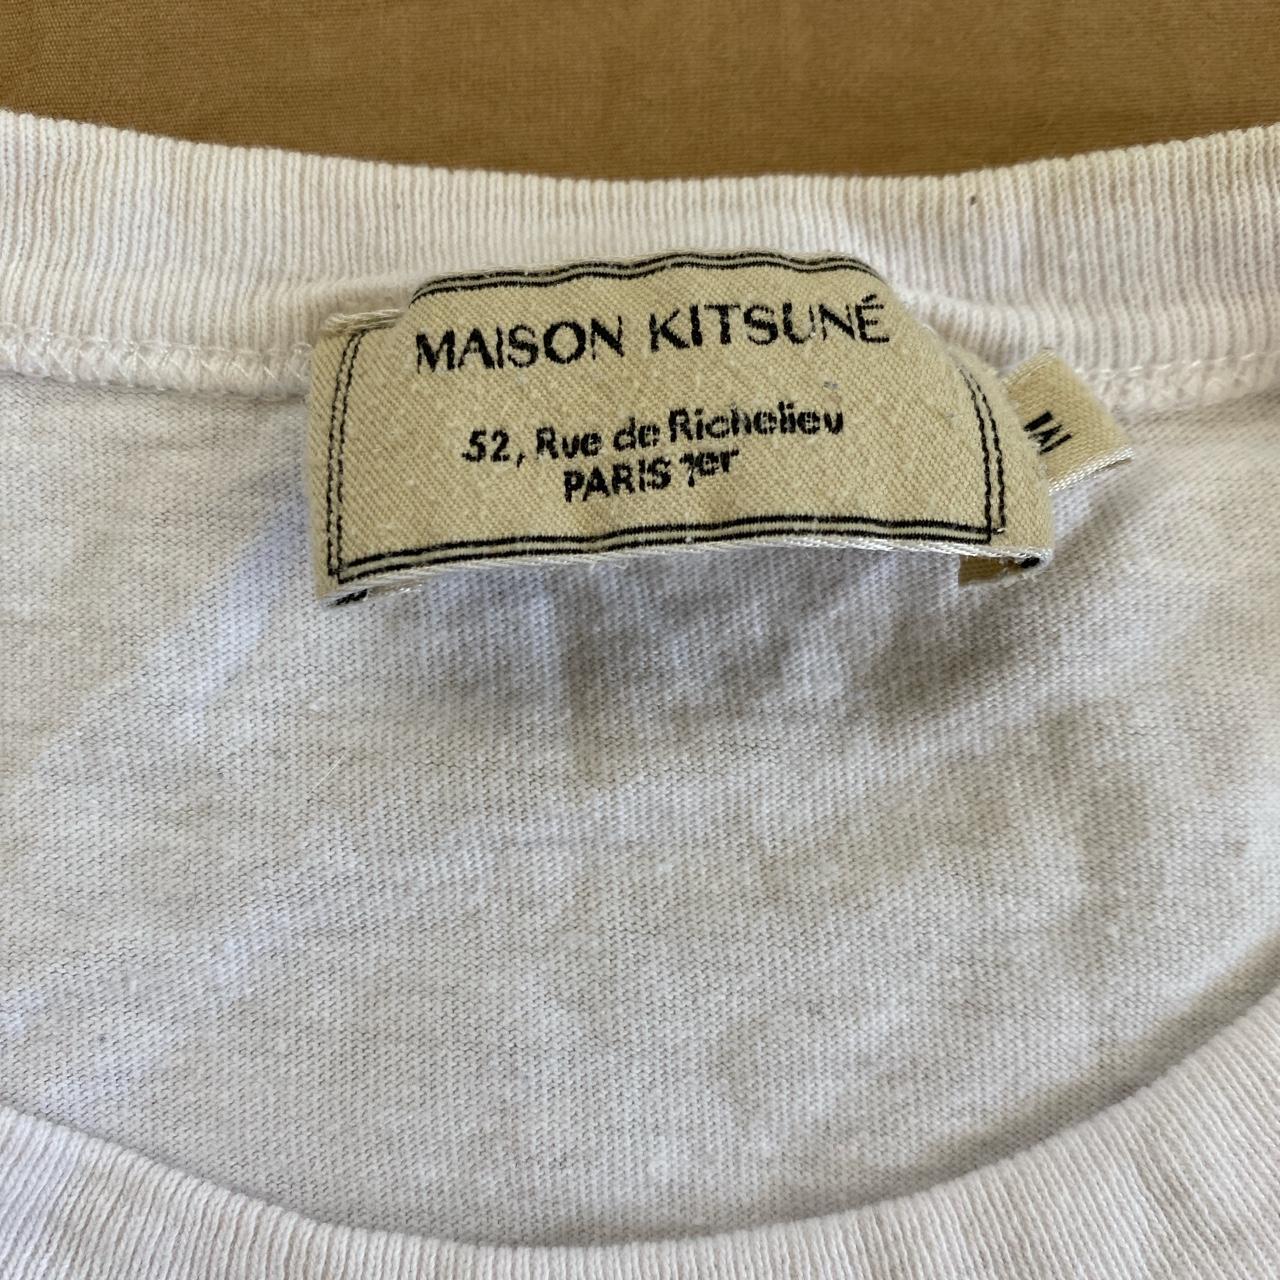 Product Image 2 - Maison Kitsuné tee shirt, bought